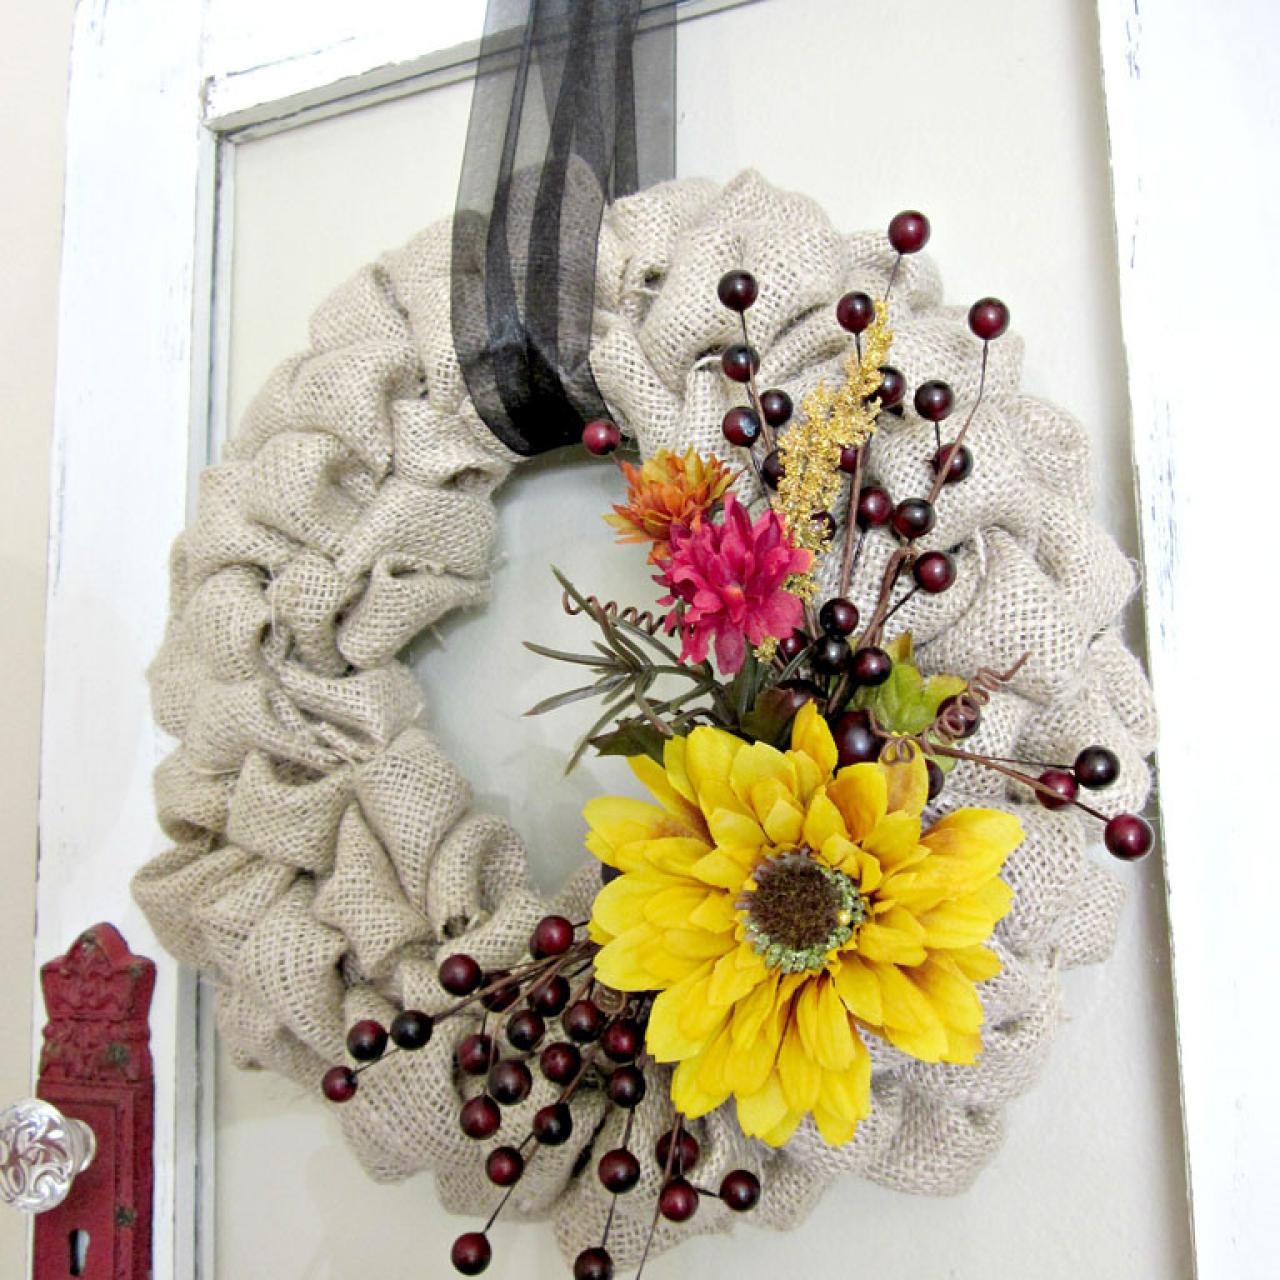 DIY Burlap Wreath and Burlap Flowers - Living Chic Mom